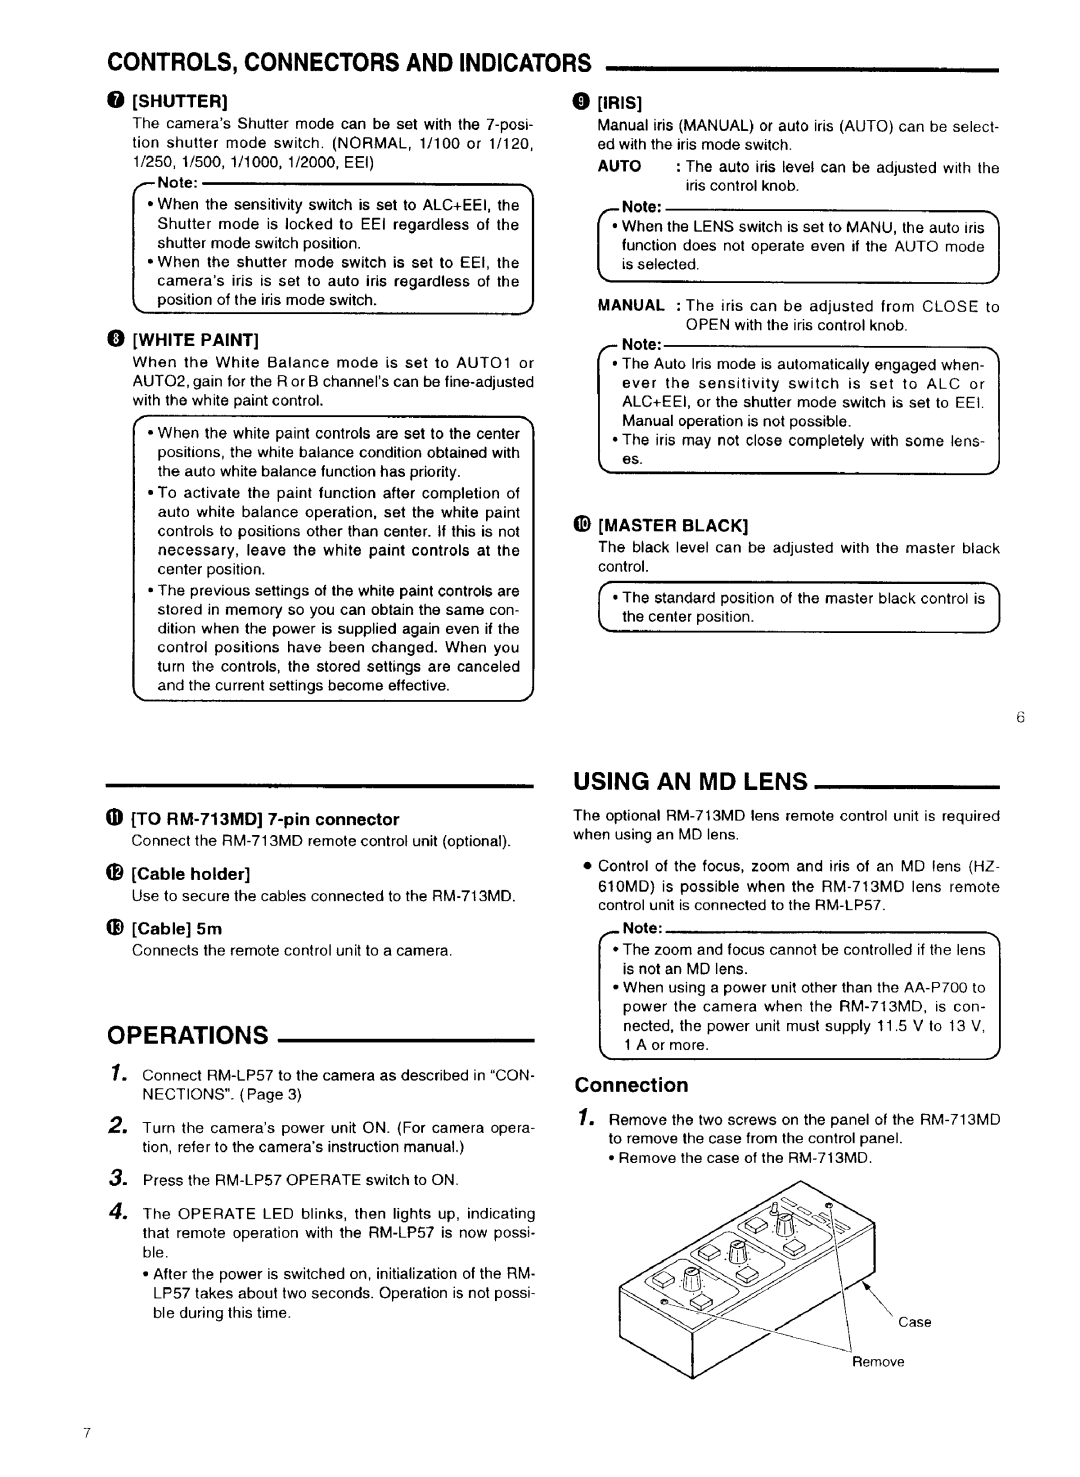 JVC RM-LP57 manual 